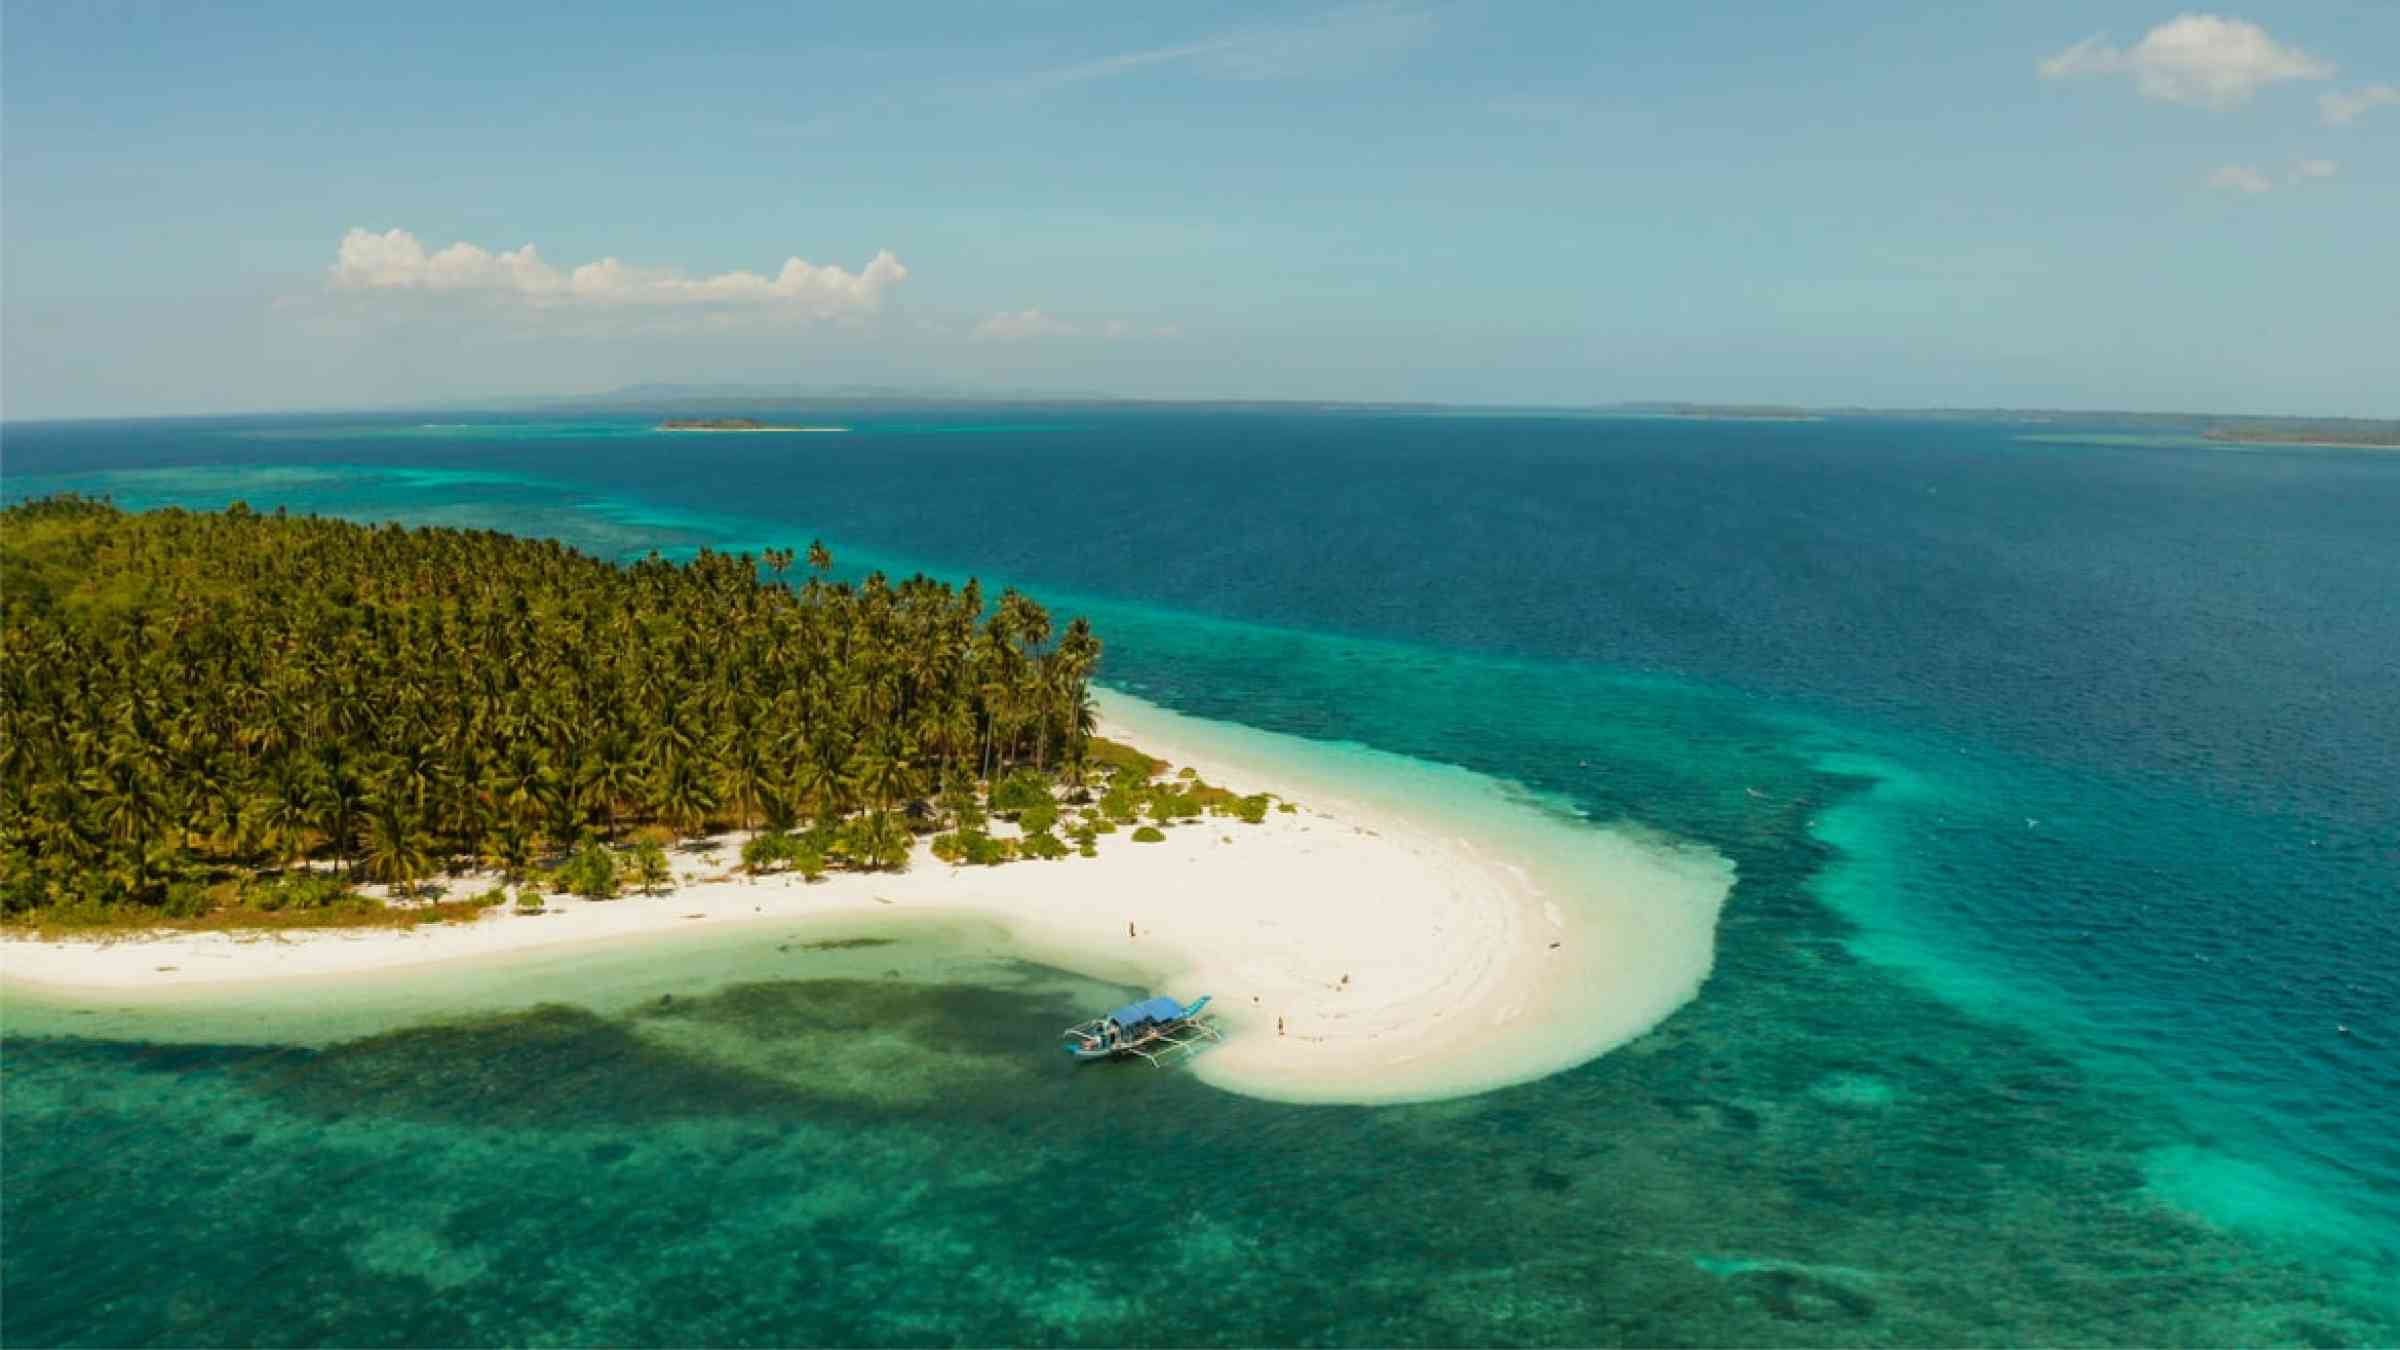 The coast of an atoll, with palm trees on a sandy beach